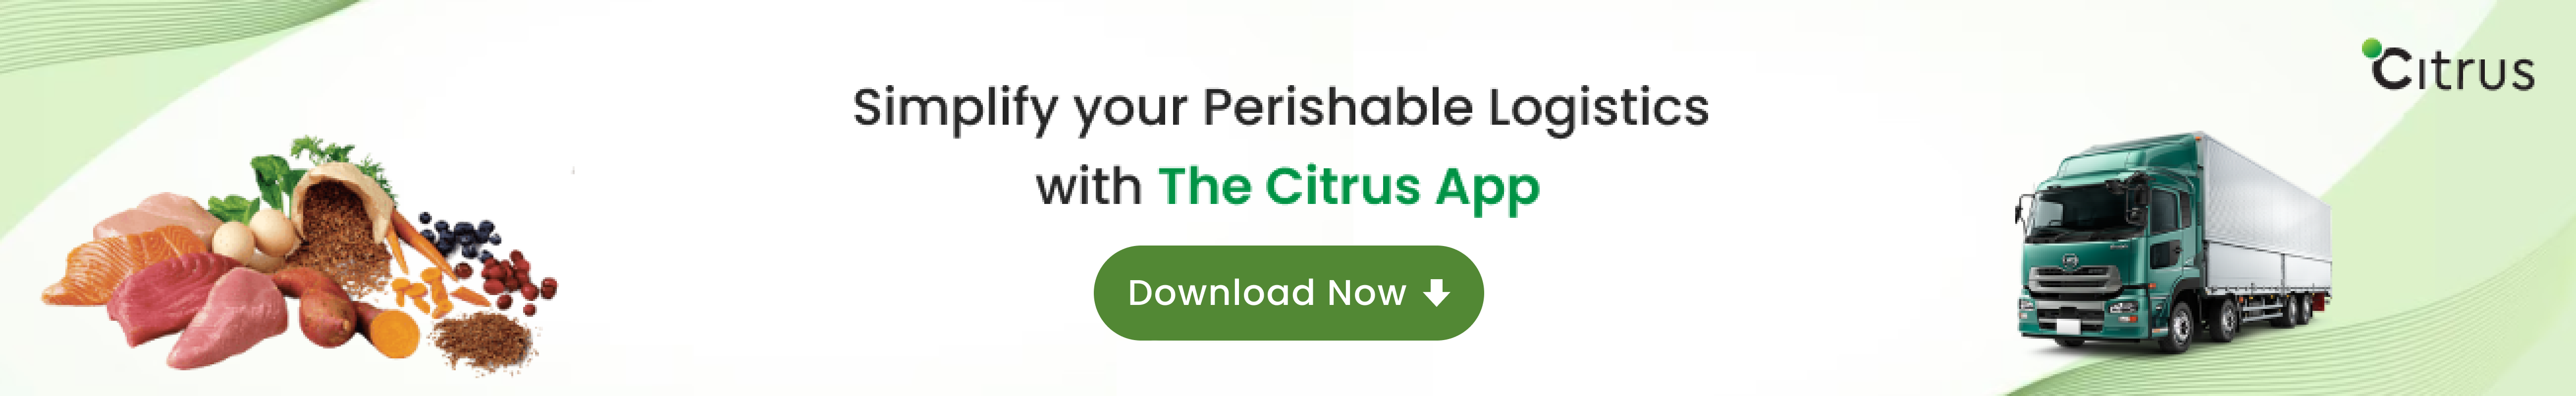   Simplify your Perishable Logistics  with The Citrus App